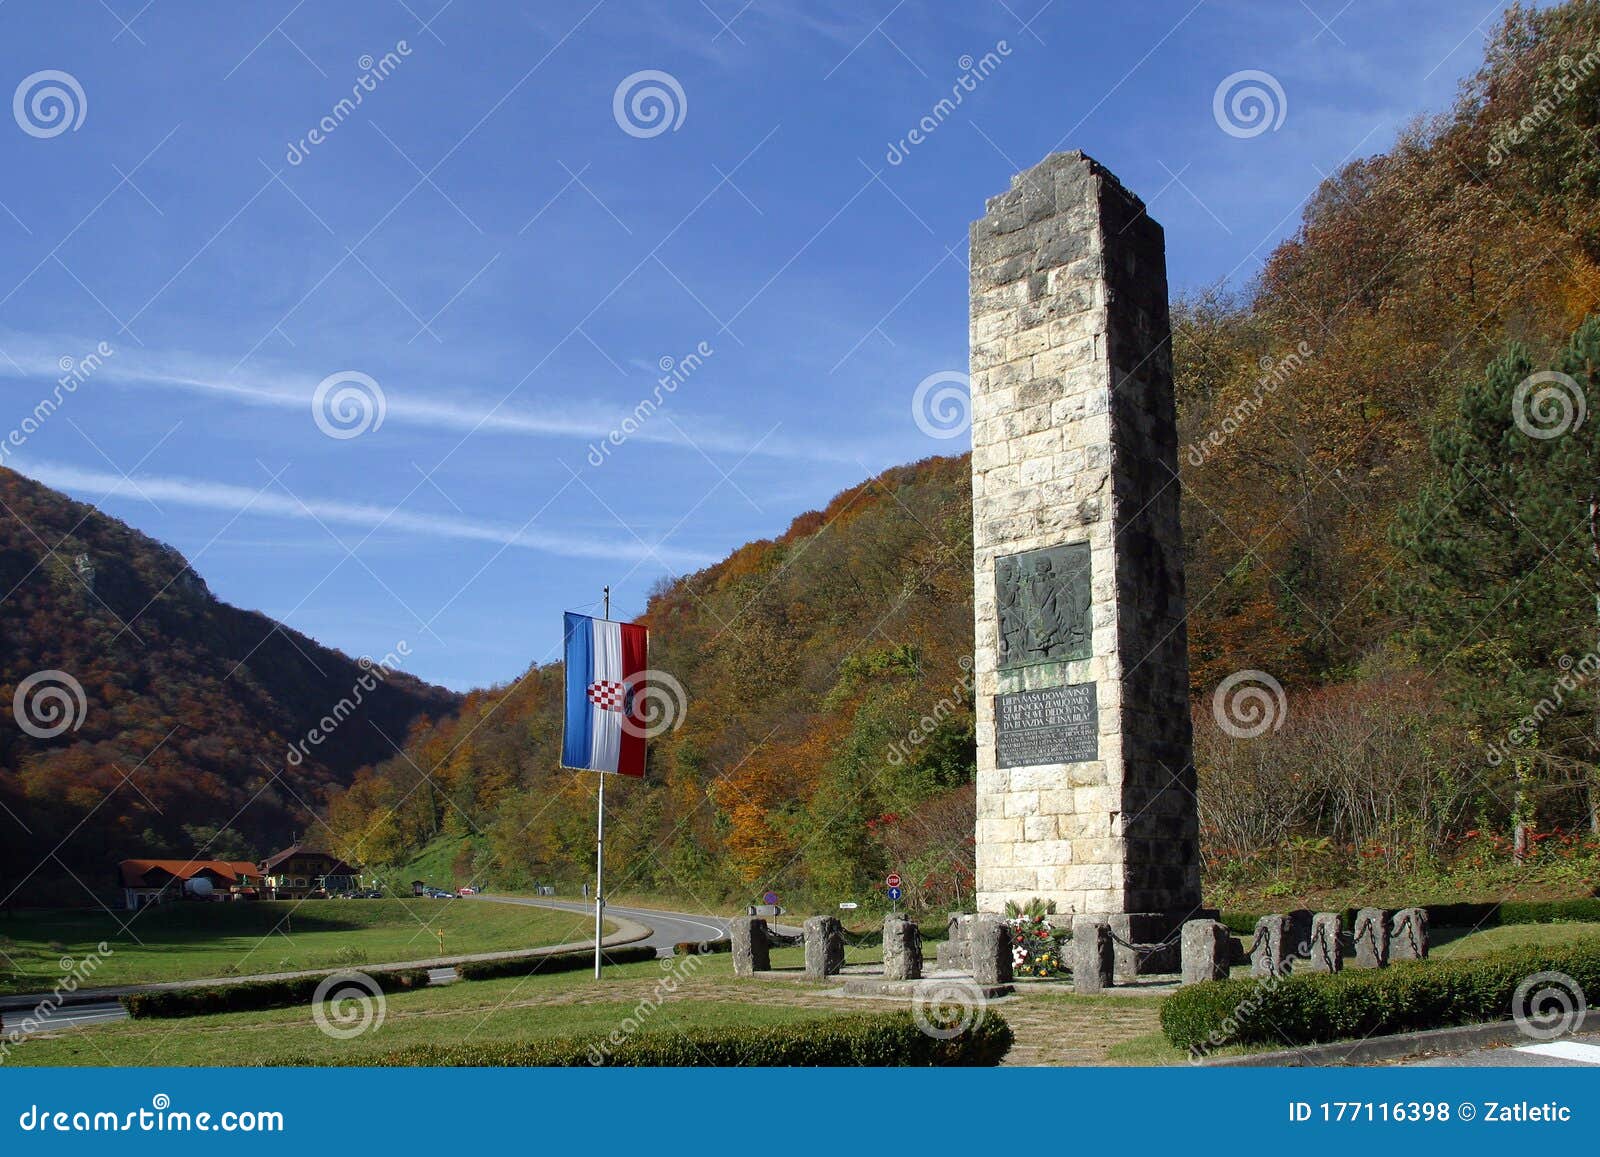 monument to croatian national anthem in zelenjak, kumrovec, croatia